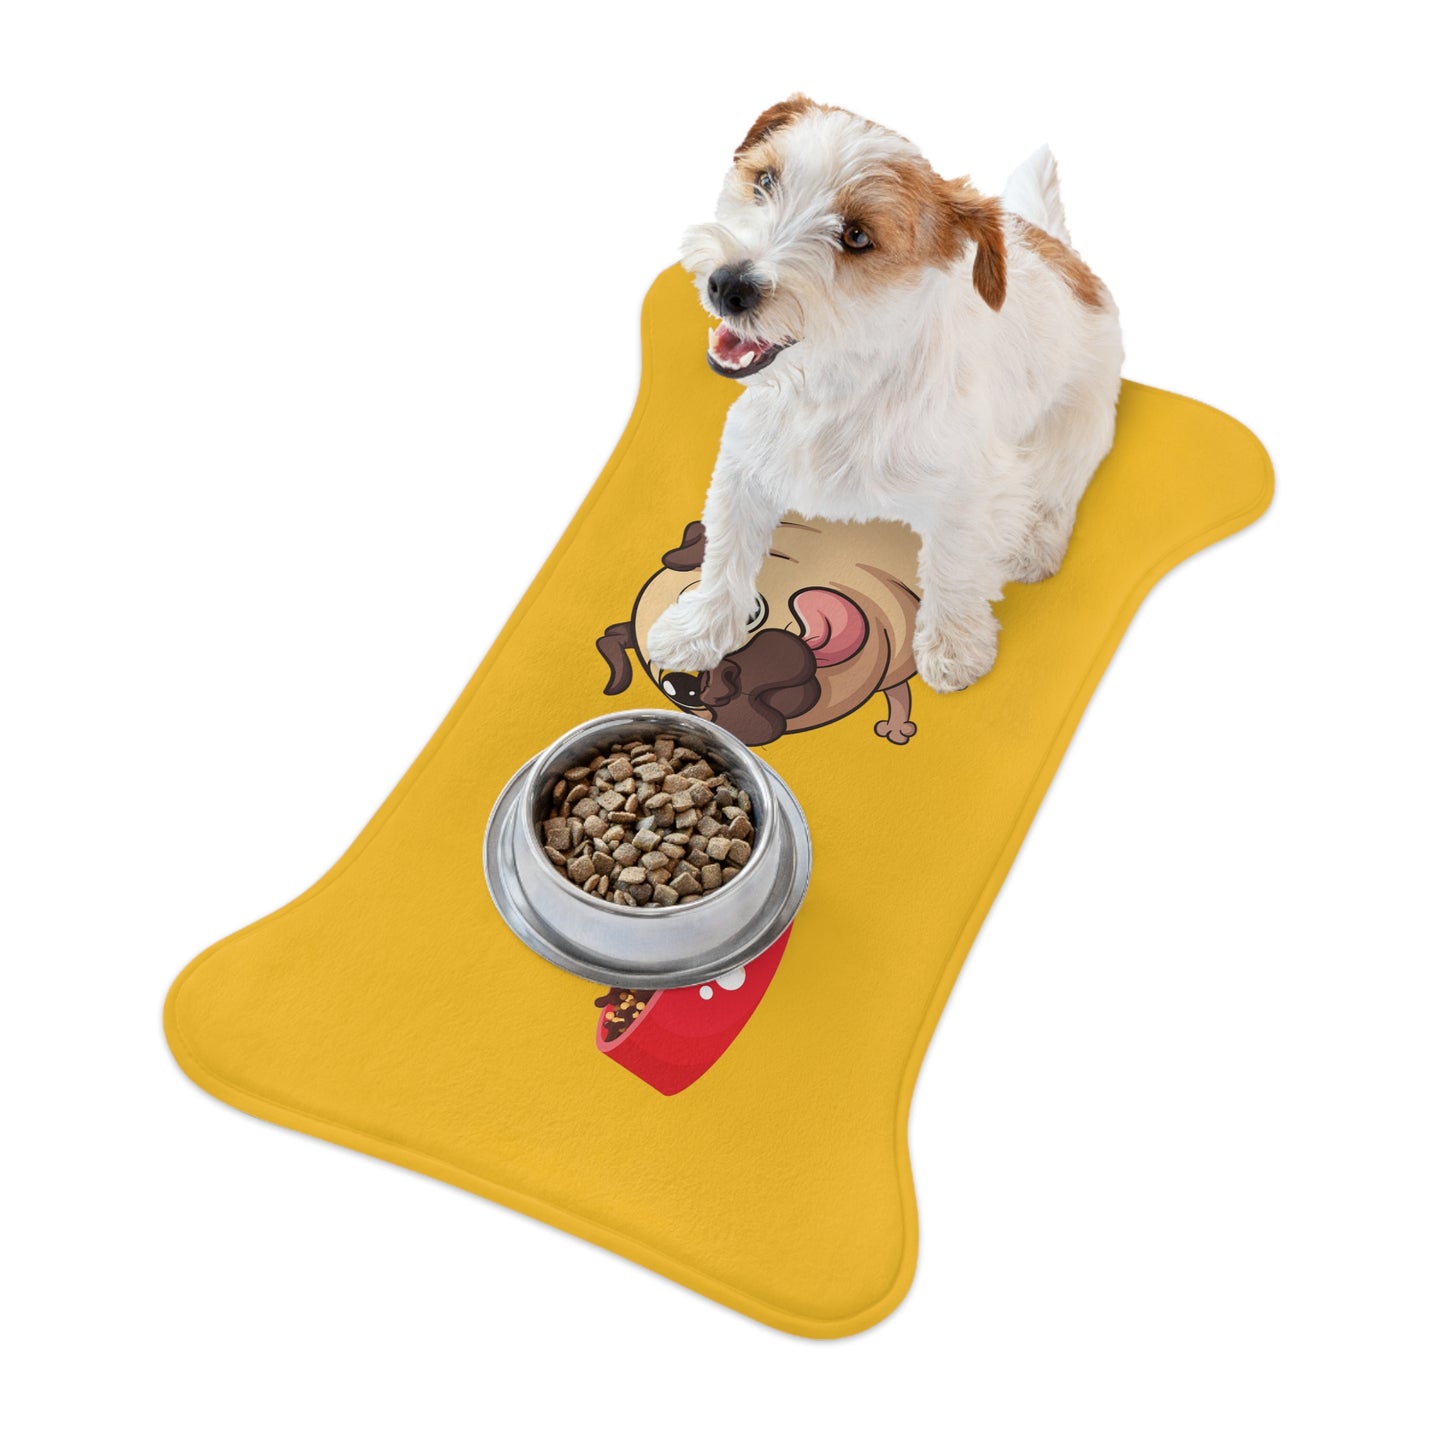 Pet Feeding Mat - Bone Shaped, Golden Yellow with Running Pug